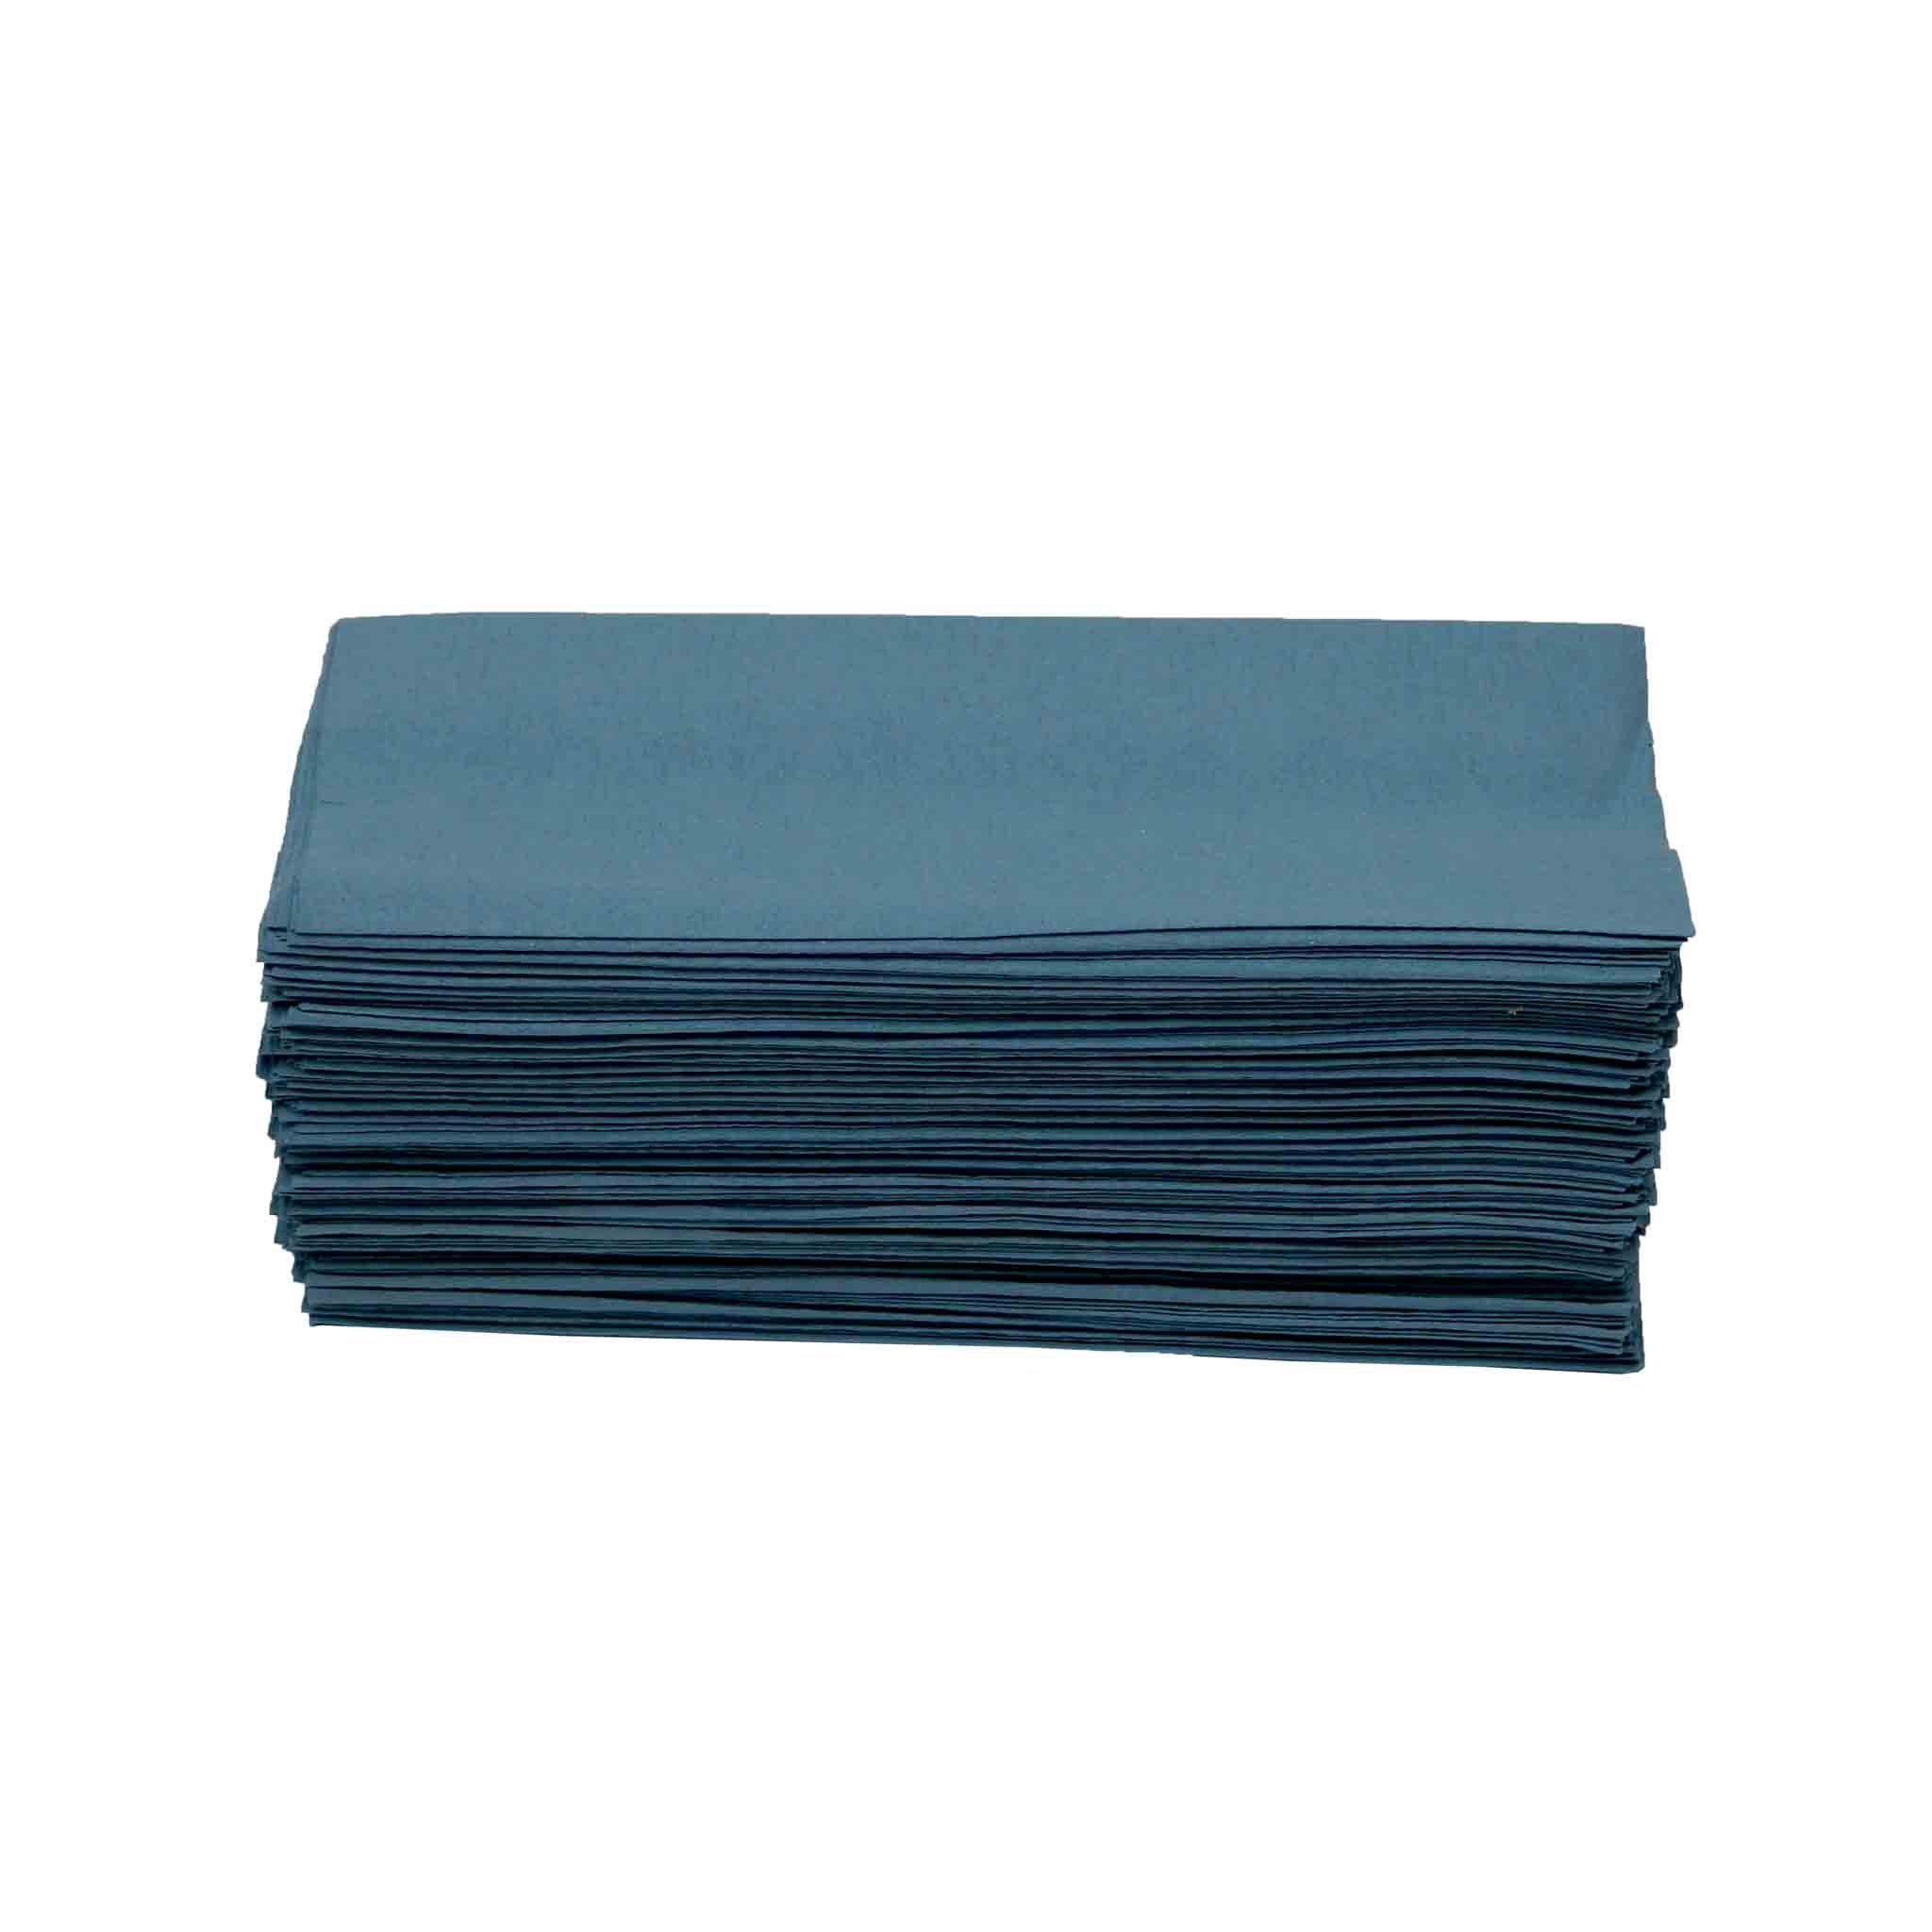 Blue C Fold 1 Ply Paper Hand Towels - 2400 Towels Per Case